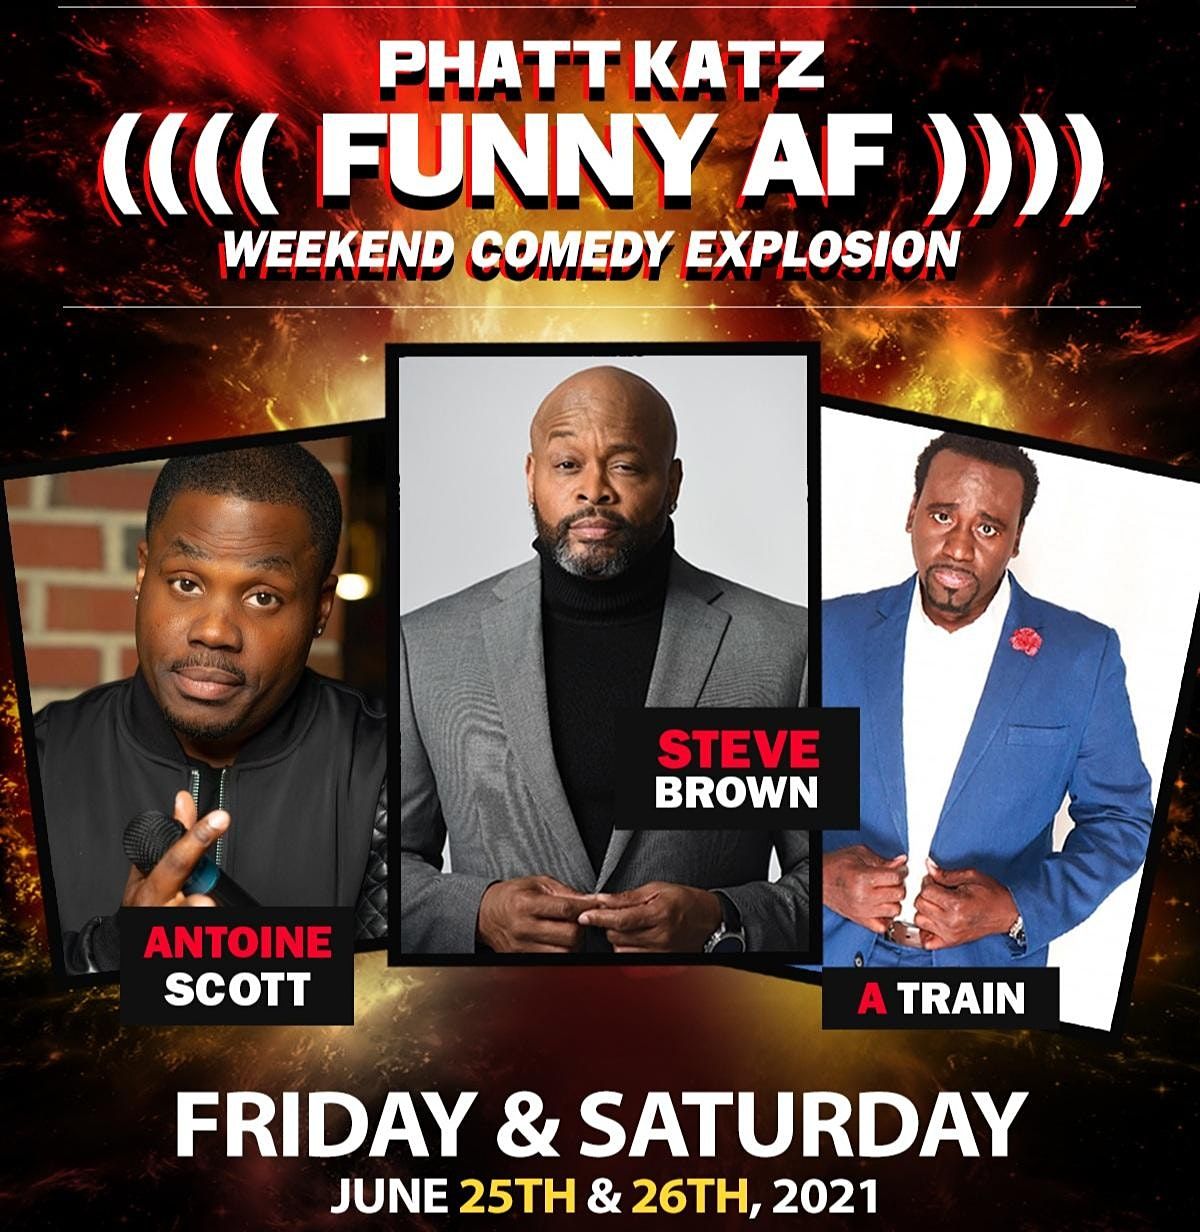 Weekend Comedy Explosion ft Antoine Scott, Steve Brown & A Train